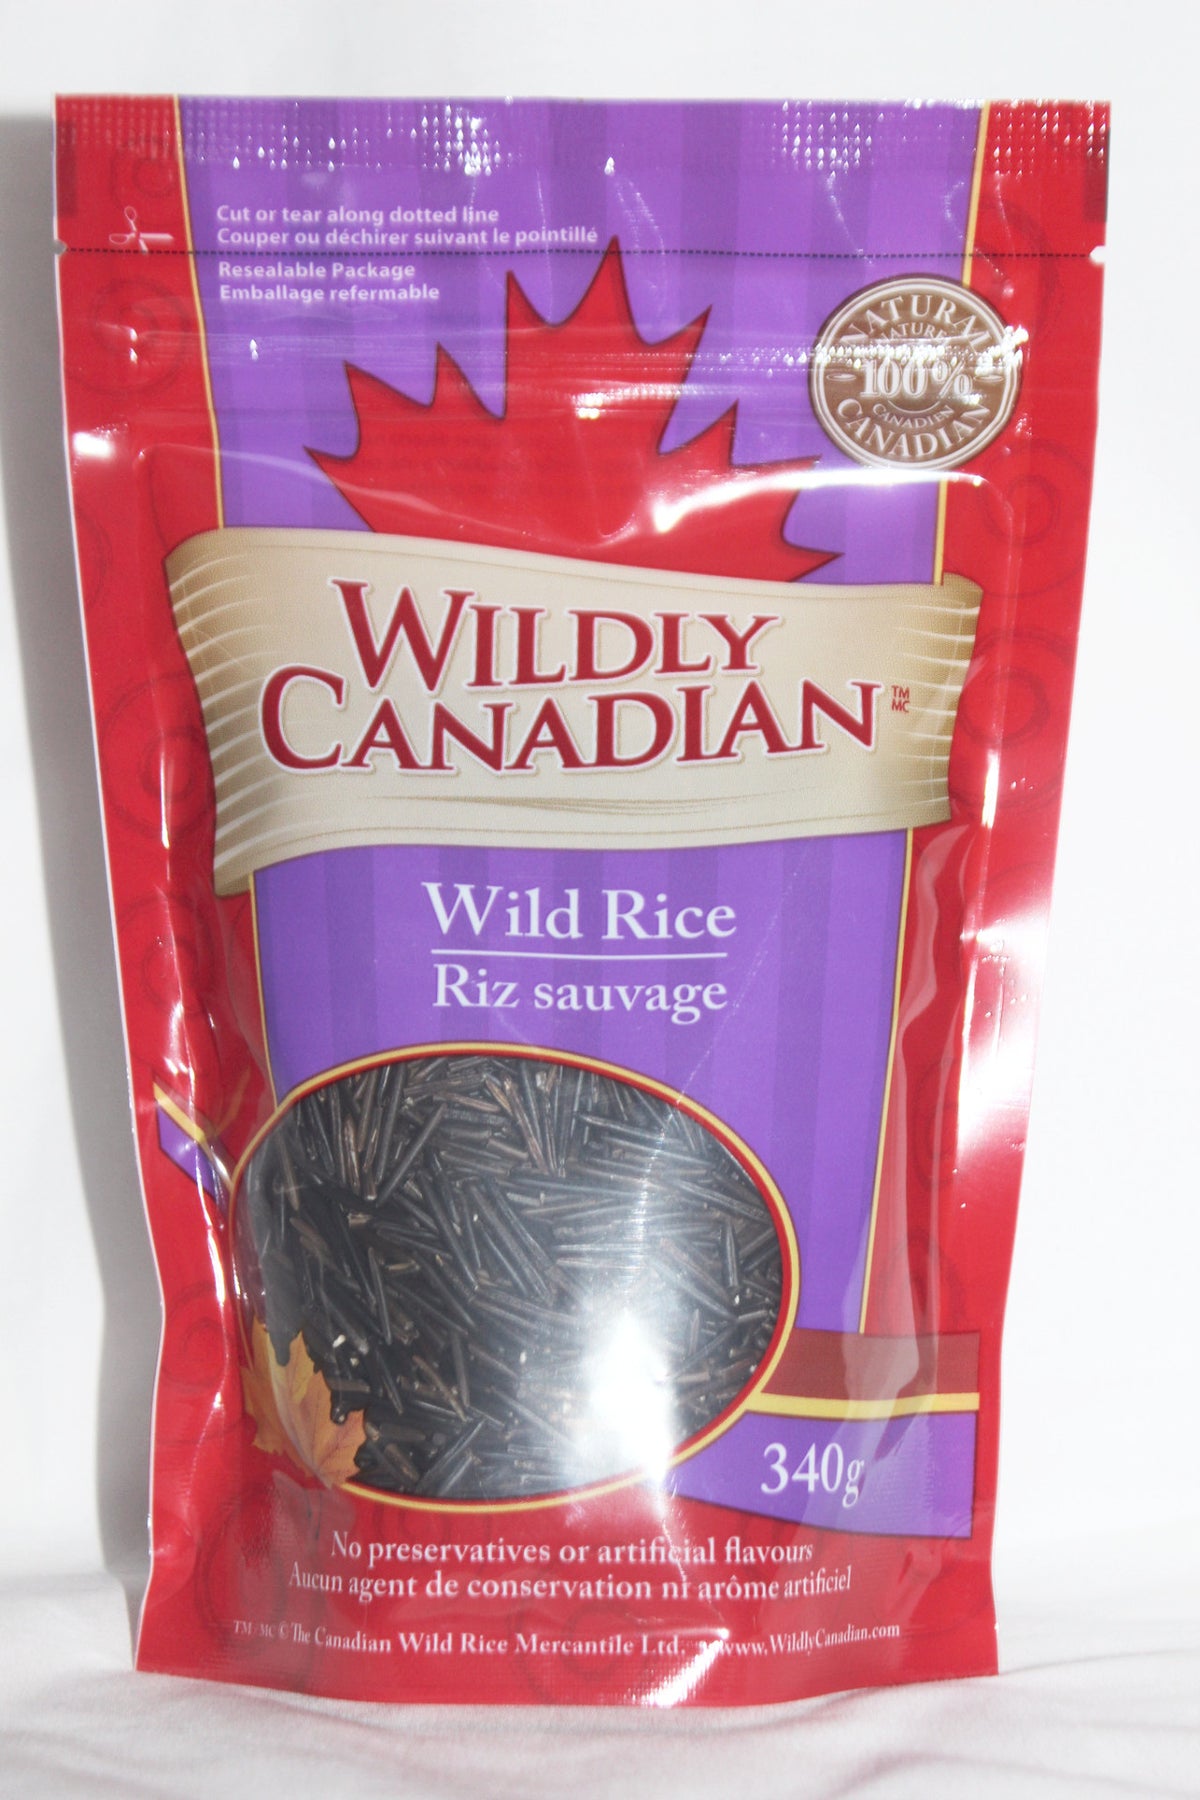 100% Canadian Natural Wild Rice - The Canadian Wild Rice Mercantile Ltd.